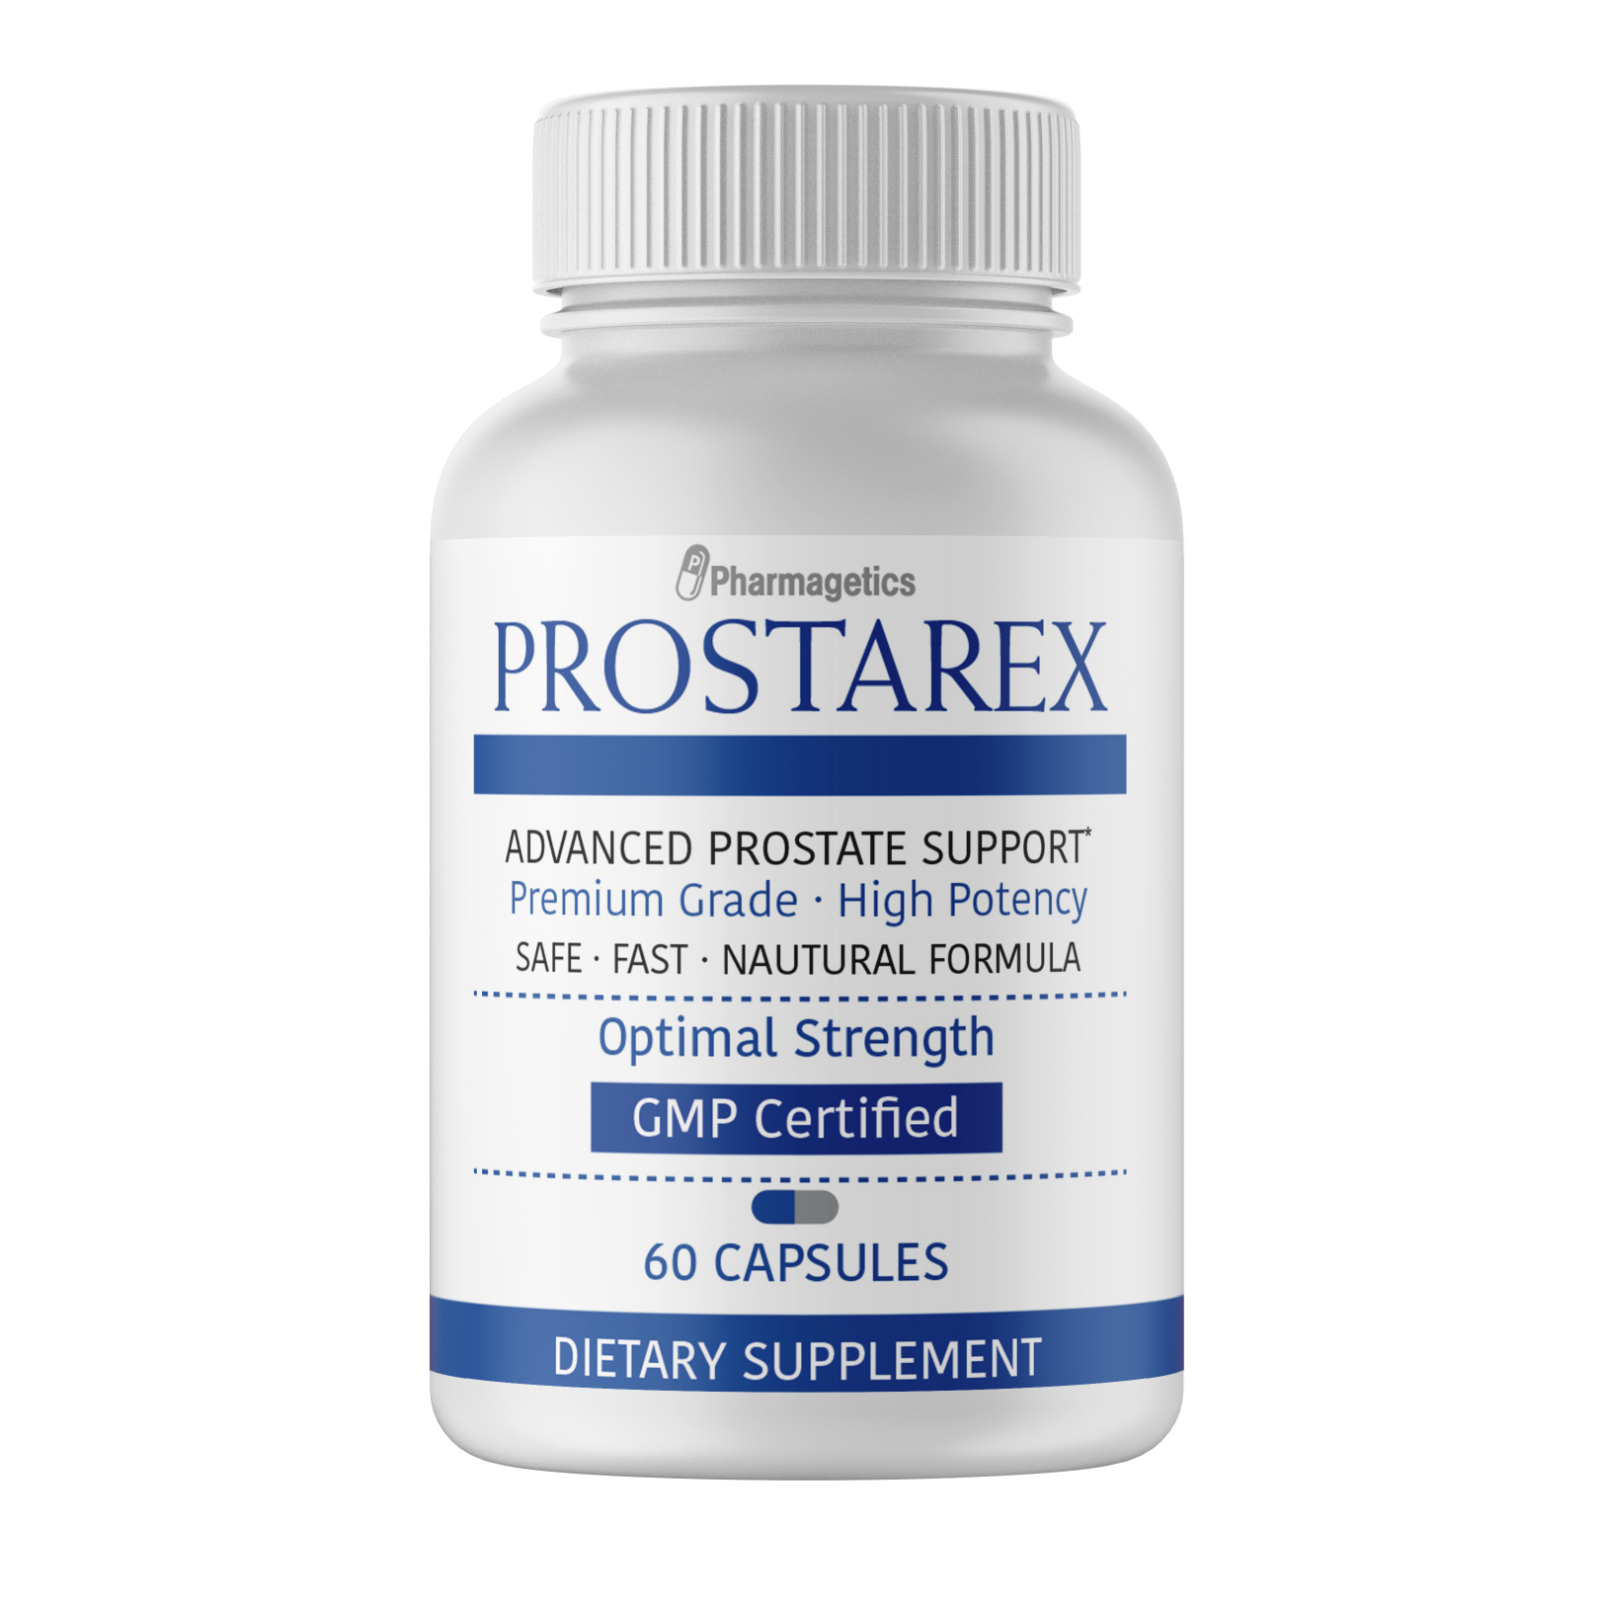 Prostarex - Advanced Prostate Support 60 Capsules